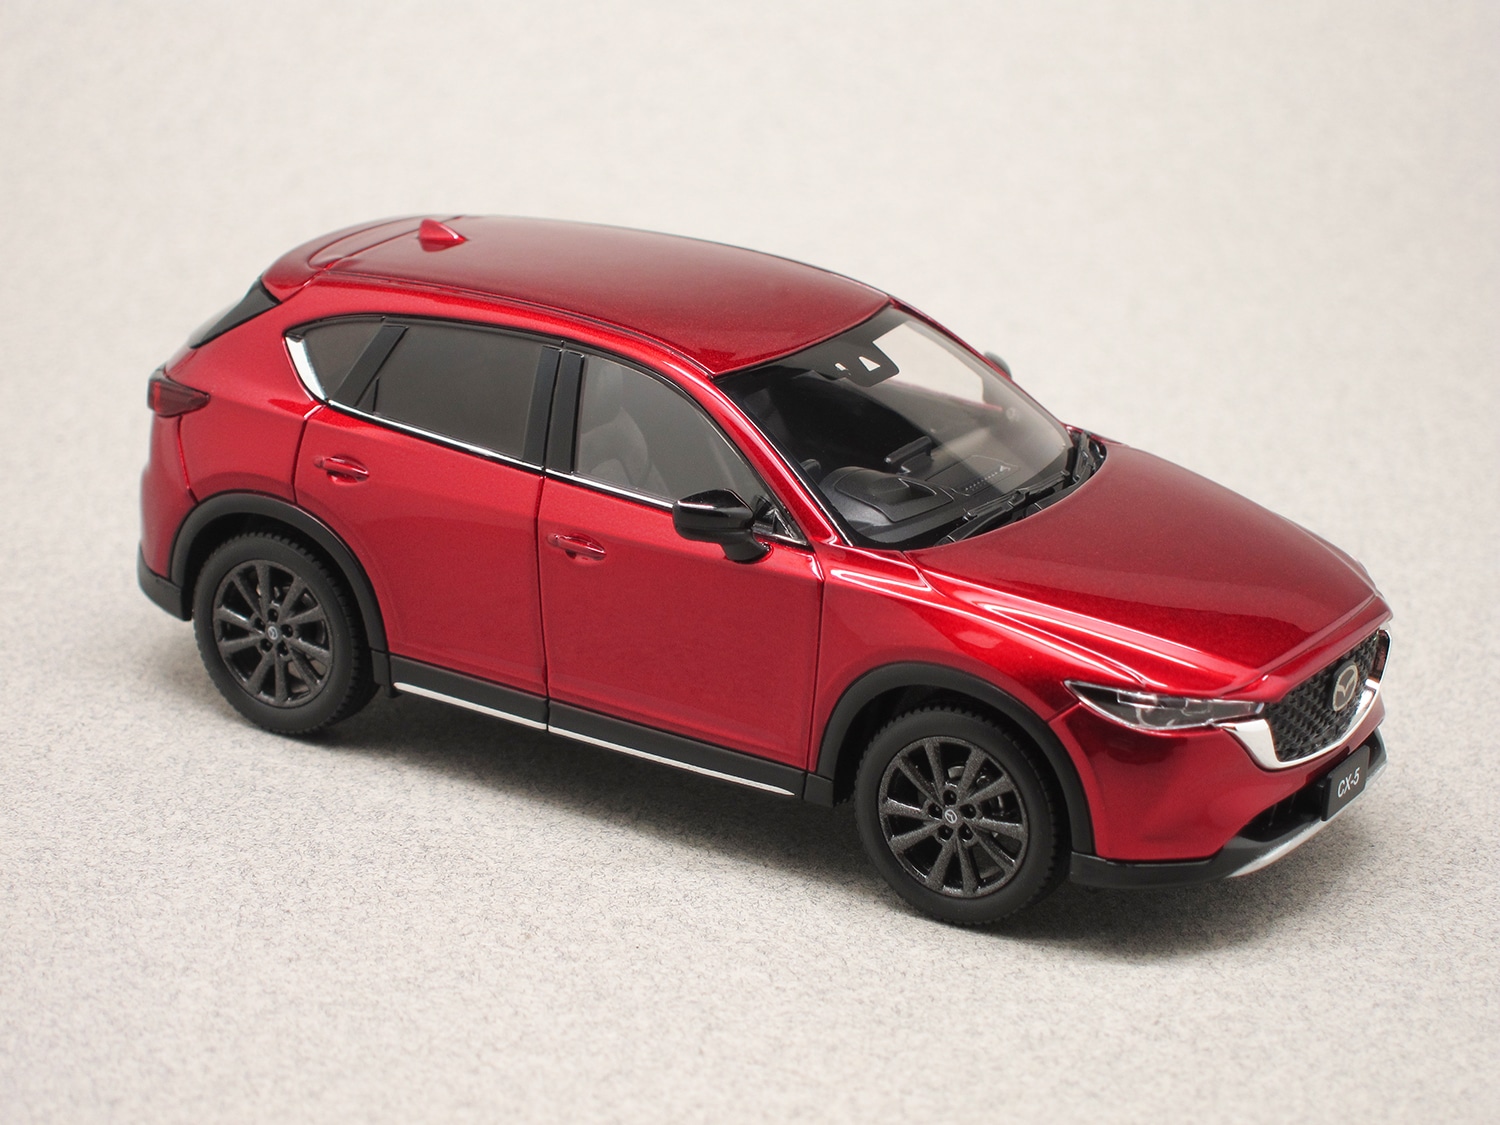 Mazda CX-5 2021 rouge (Hi-Story) 1/43e